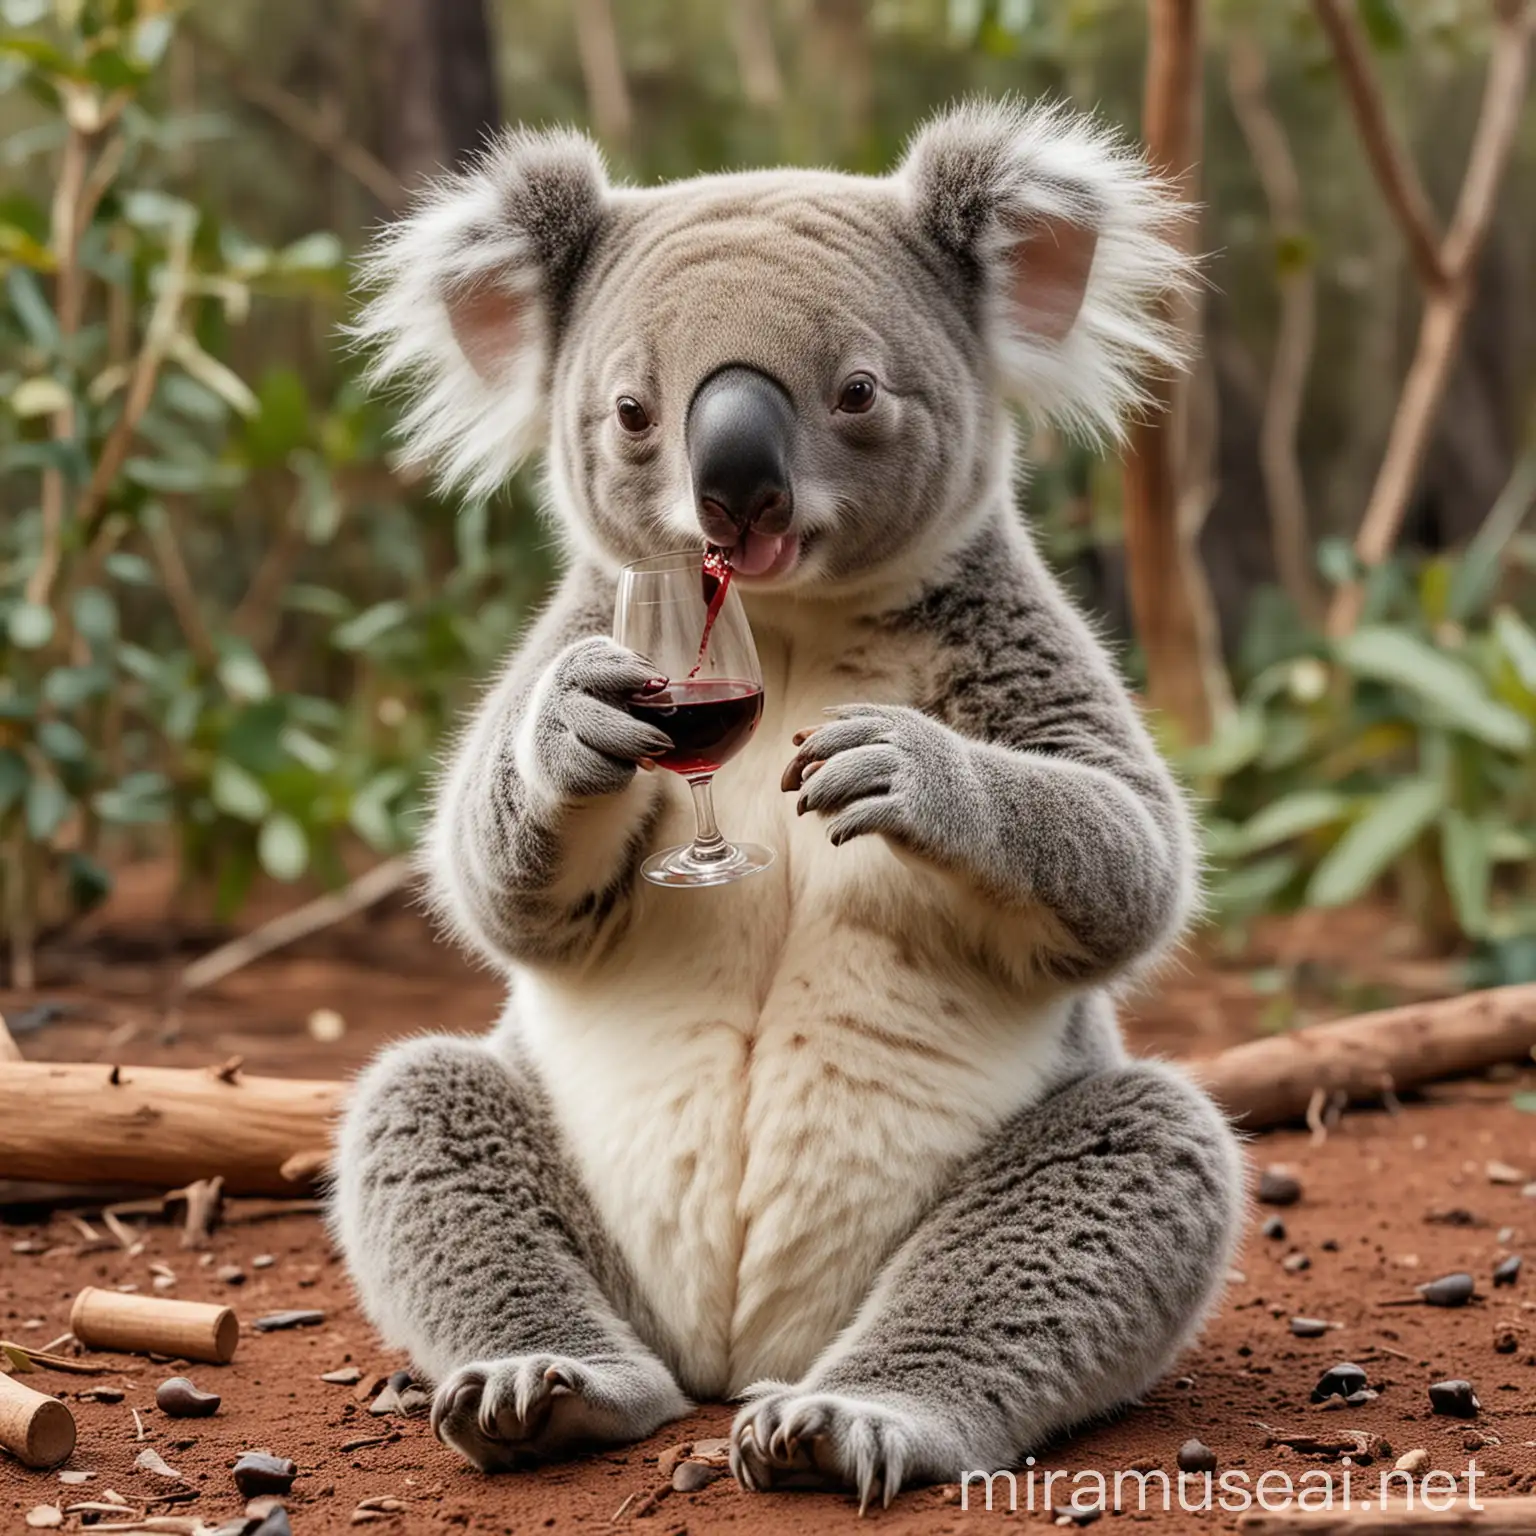 Adorable Drunken Koala Enjoying a Glass of Wine in Its Natural Habitat